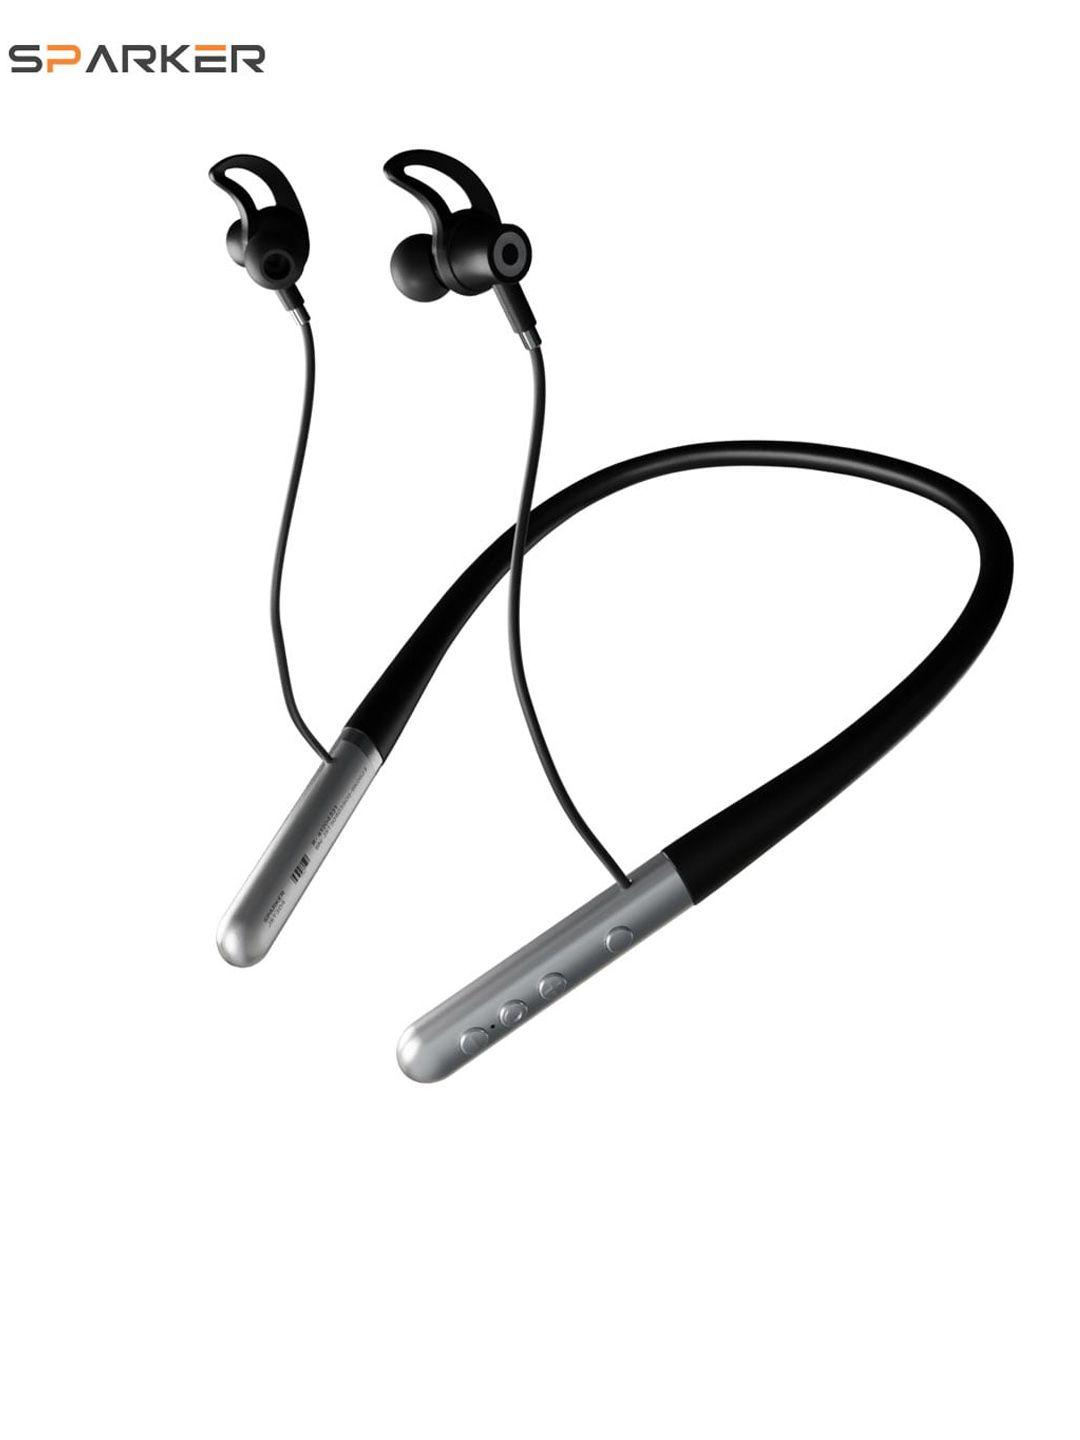 just corseca sparker neckband headphone